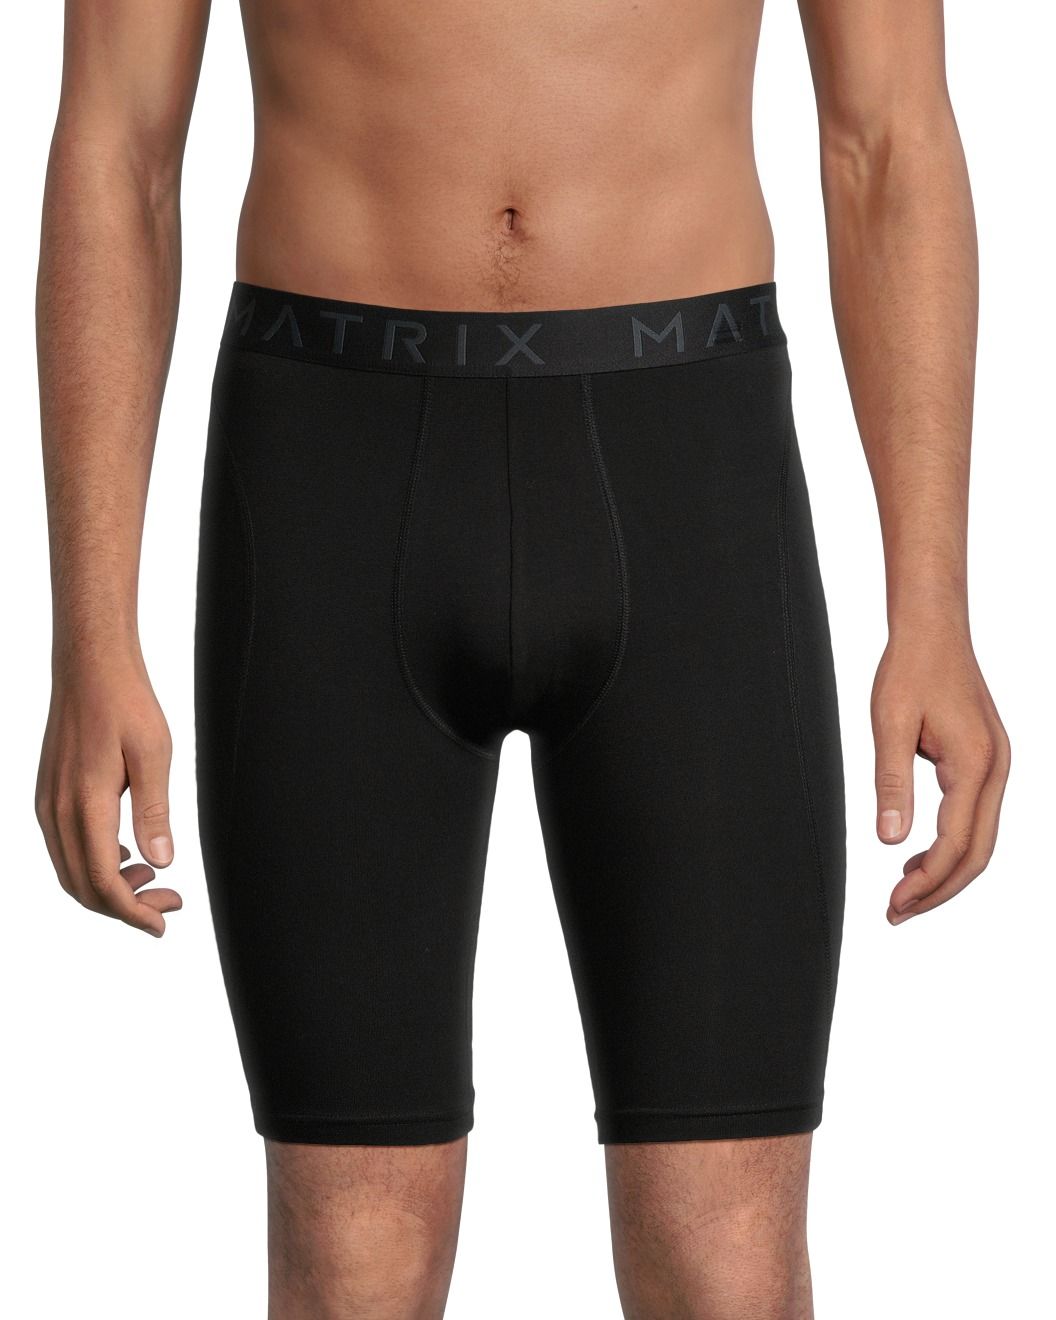 Matrix Men's 2 Pack Cotton Stretch Long Boxer Briefs Underwear